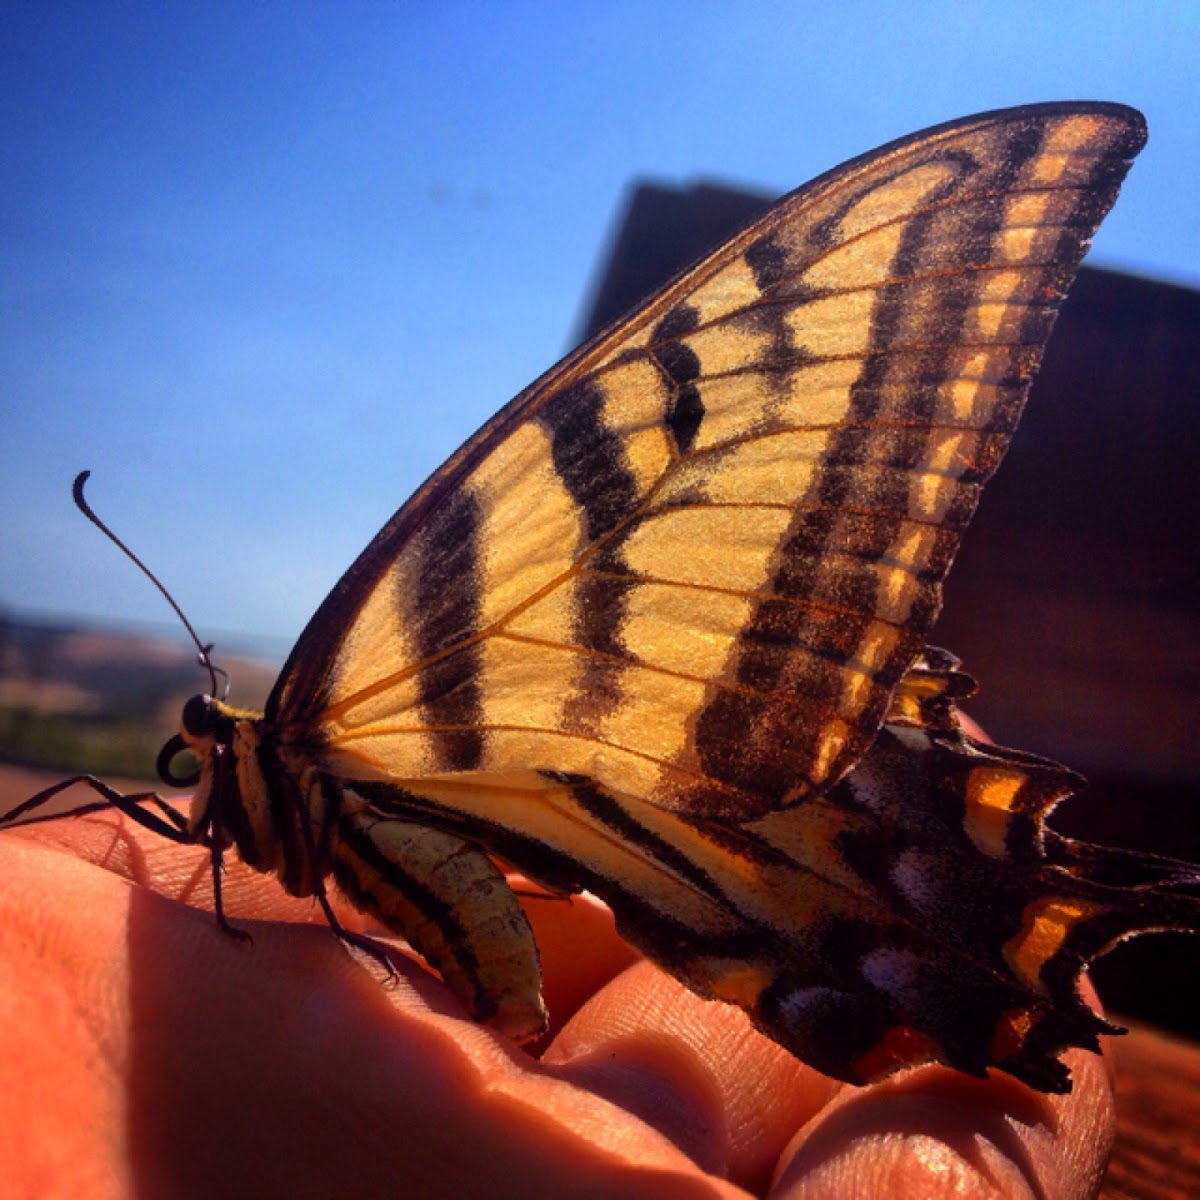 Western Tiger Swallowtail butterfly